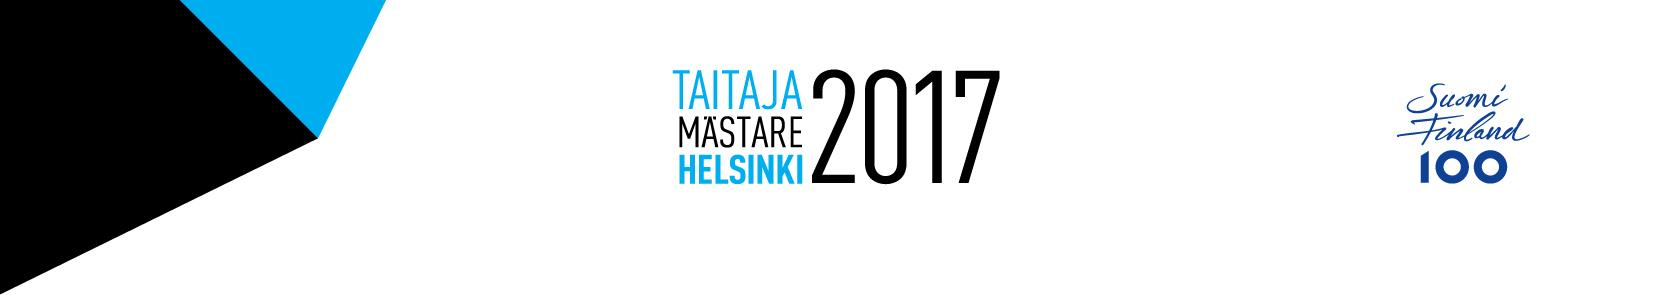 Taitaja2017 Helsinki suurseminaariohjelma tiistaina 16.5.2017 TILA 1 Merihaka 10:00-10:15 Taitaja2017 Helsinki Suurseminaarin avaus Tervetuloa Taitaja2017 Helsingin seminaariin.